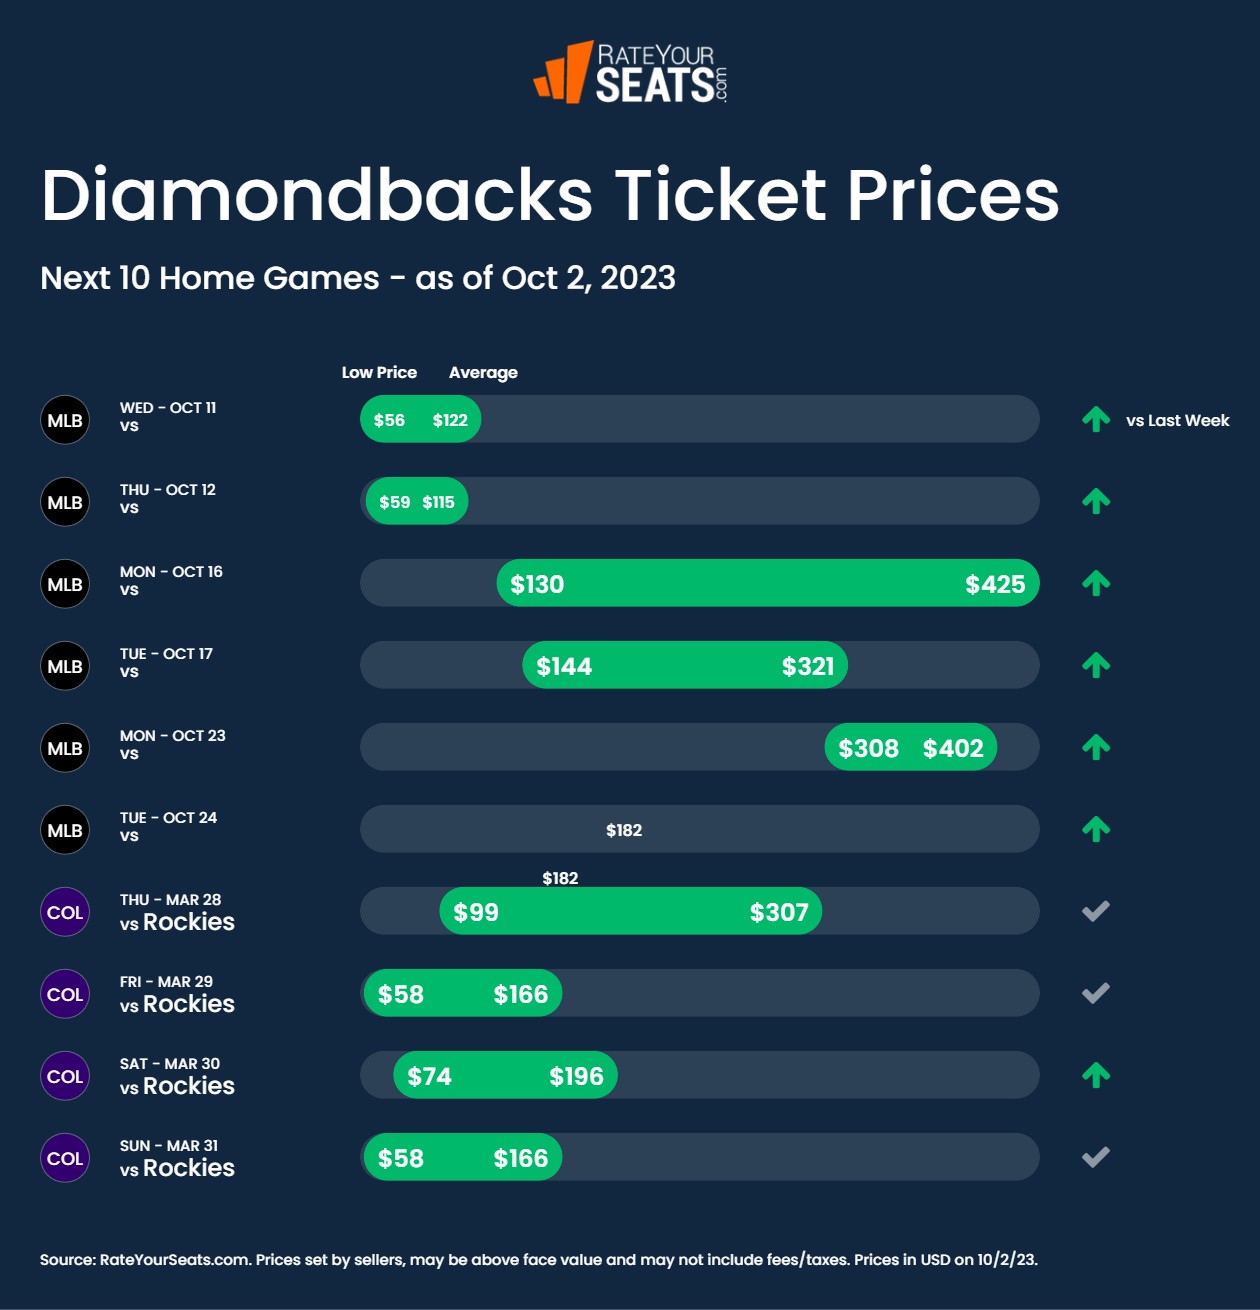 Diamondbacks Giveaways and Promotions this season